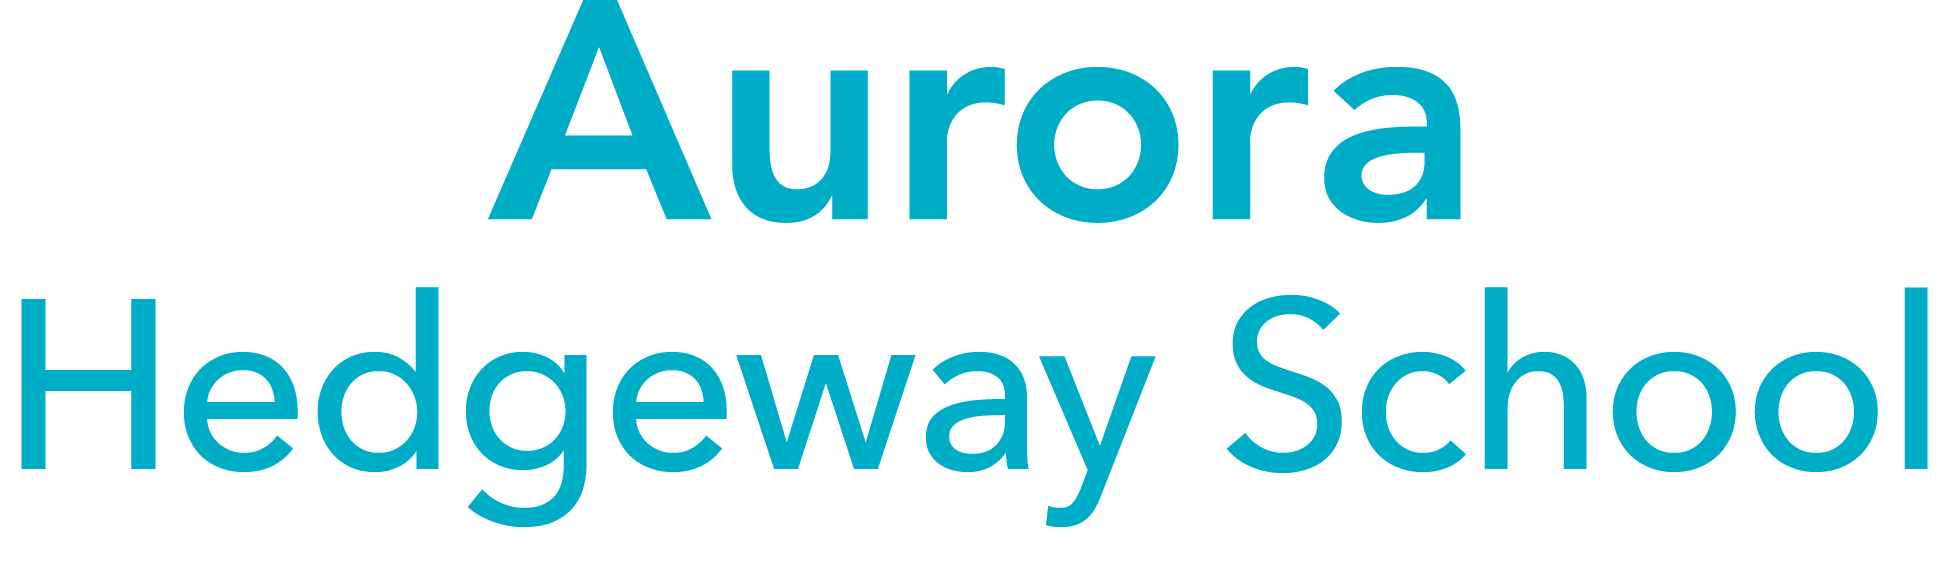 Aurora Hedgeway School